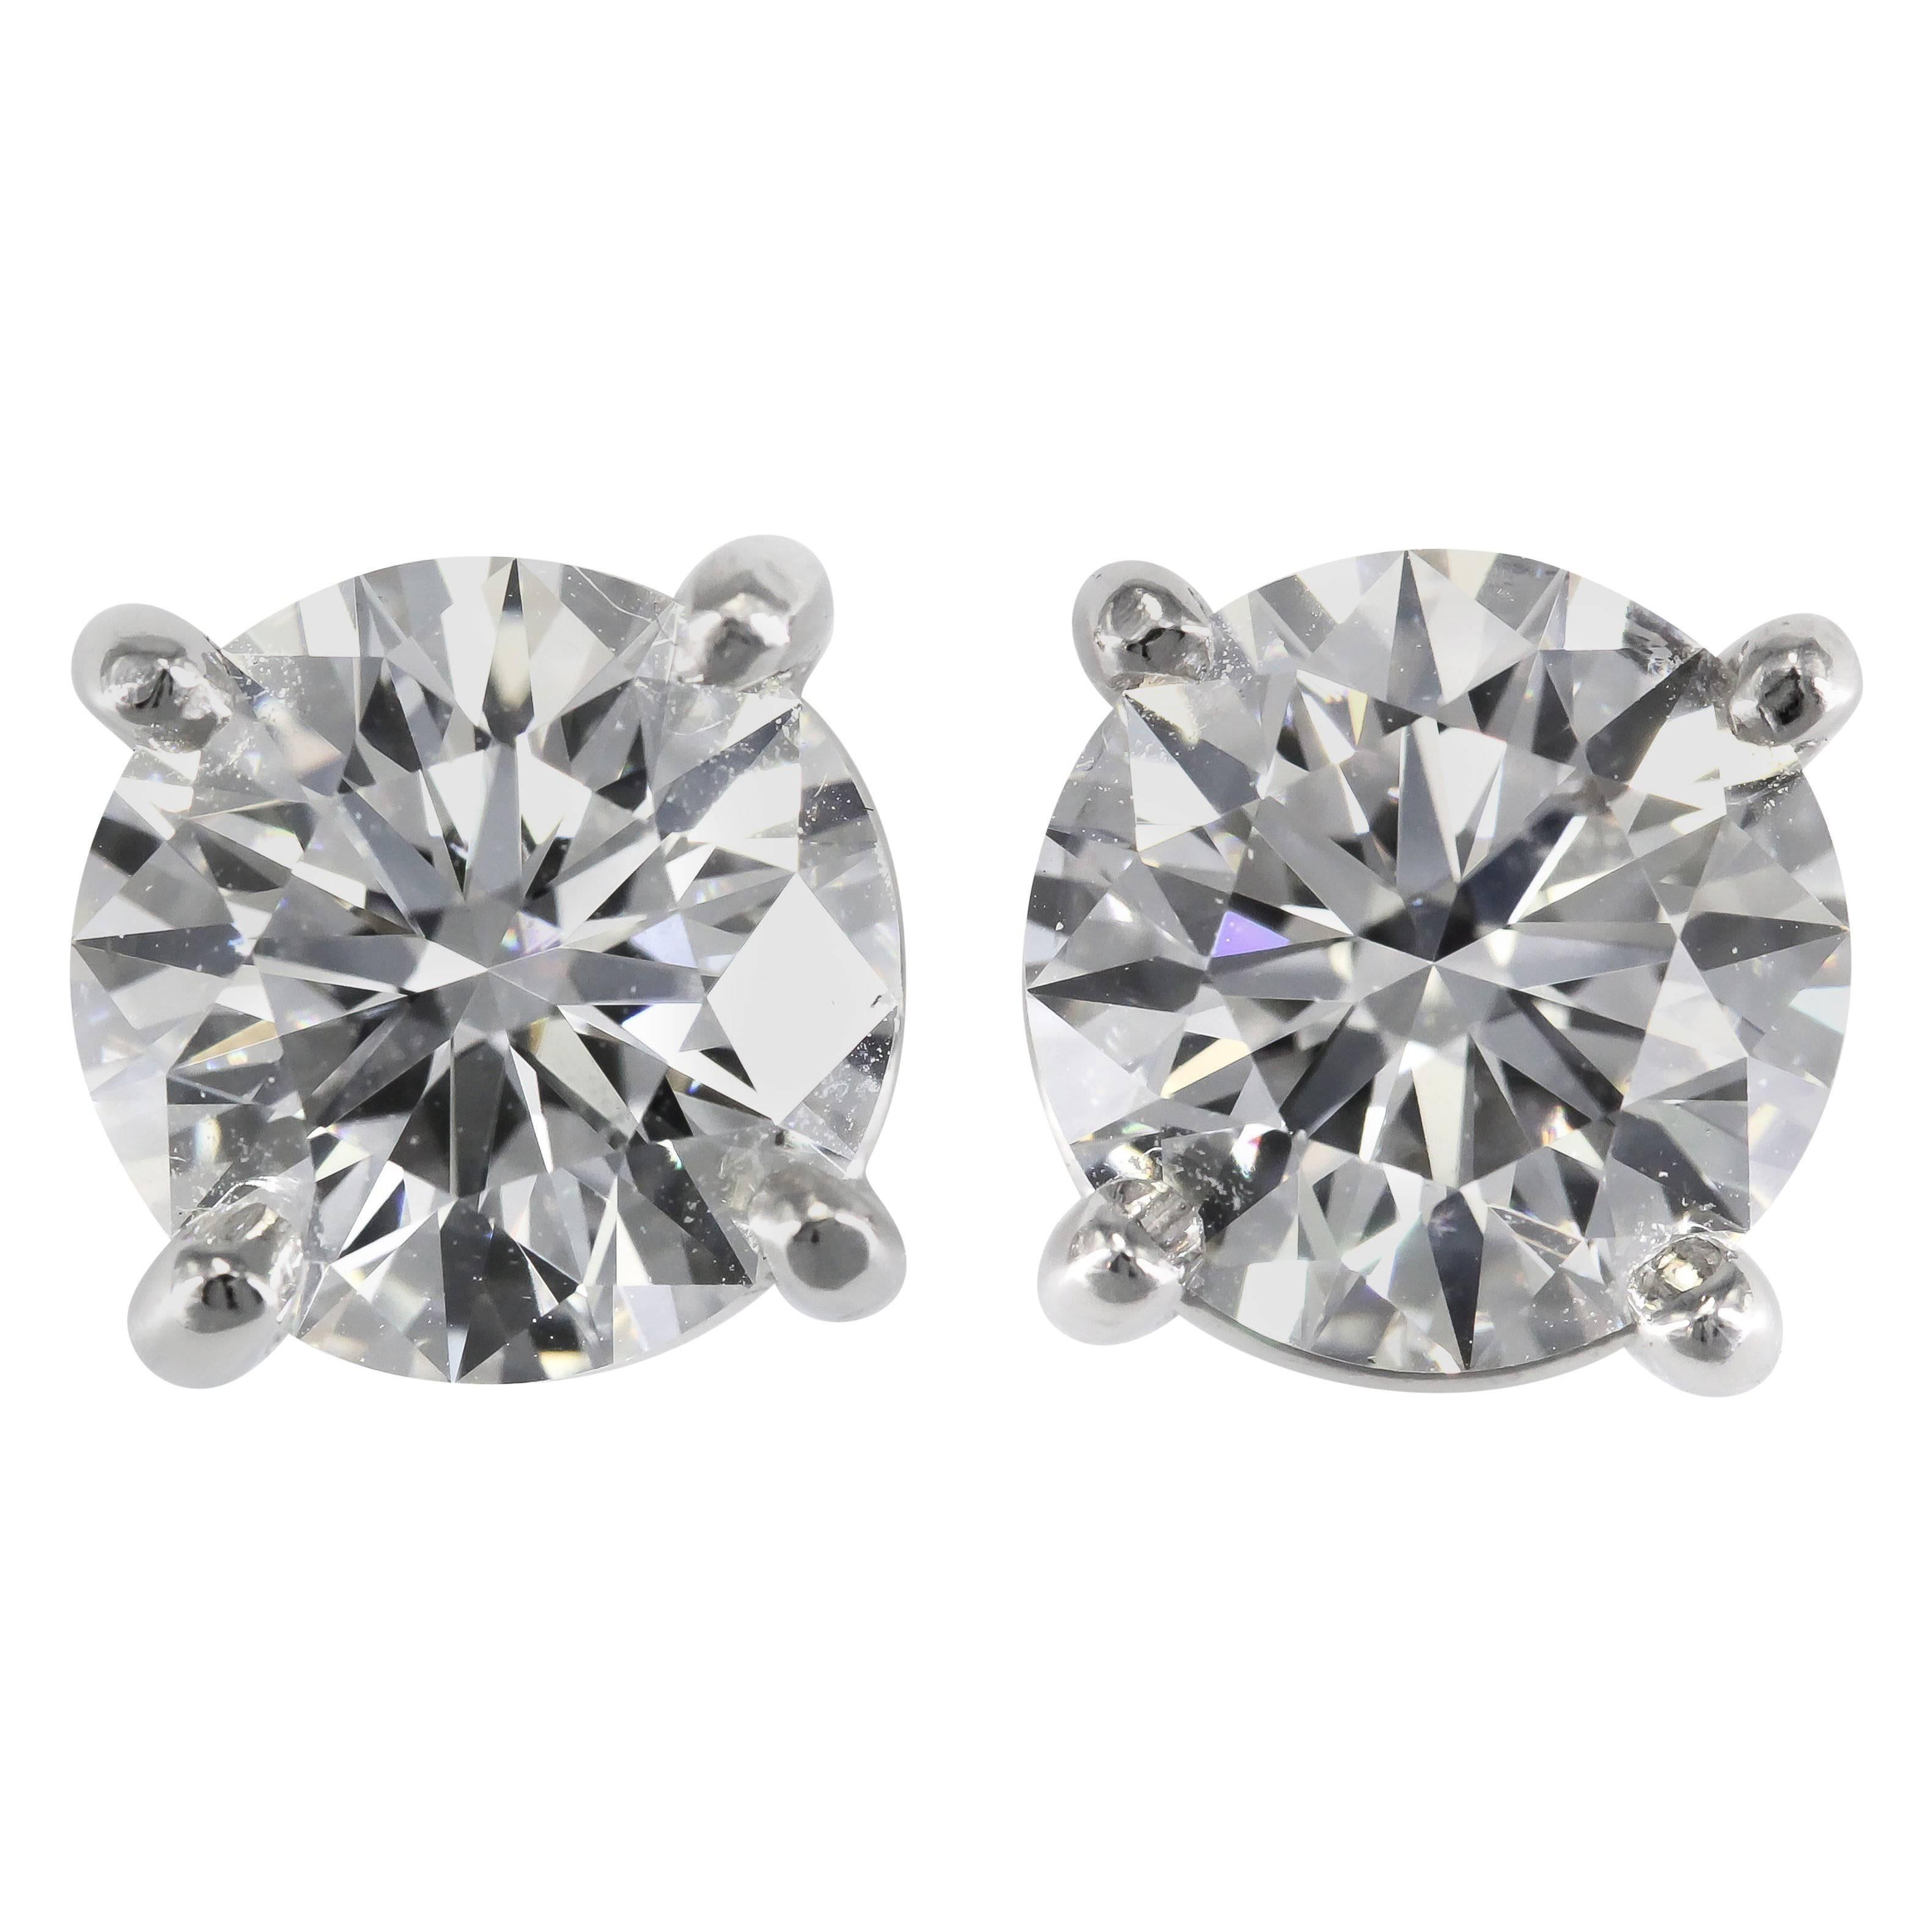 Tiffany & Co. E-VS1-VVS2 3xEX 4.63 carats Diamond Studs 